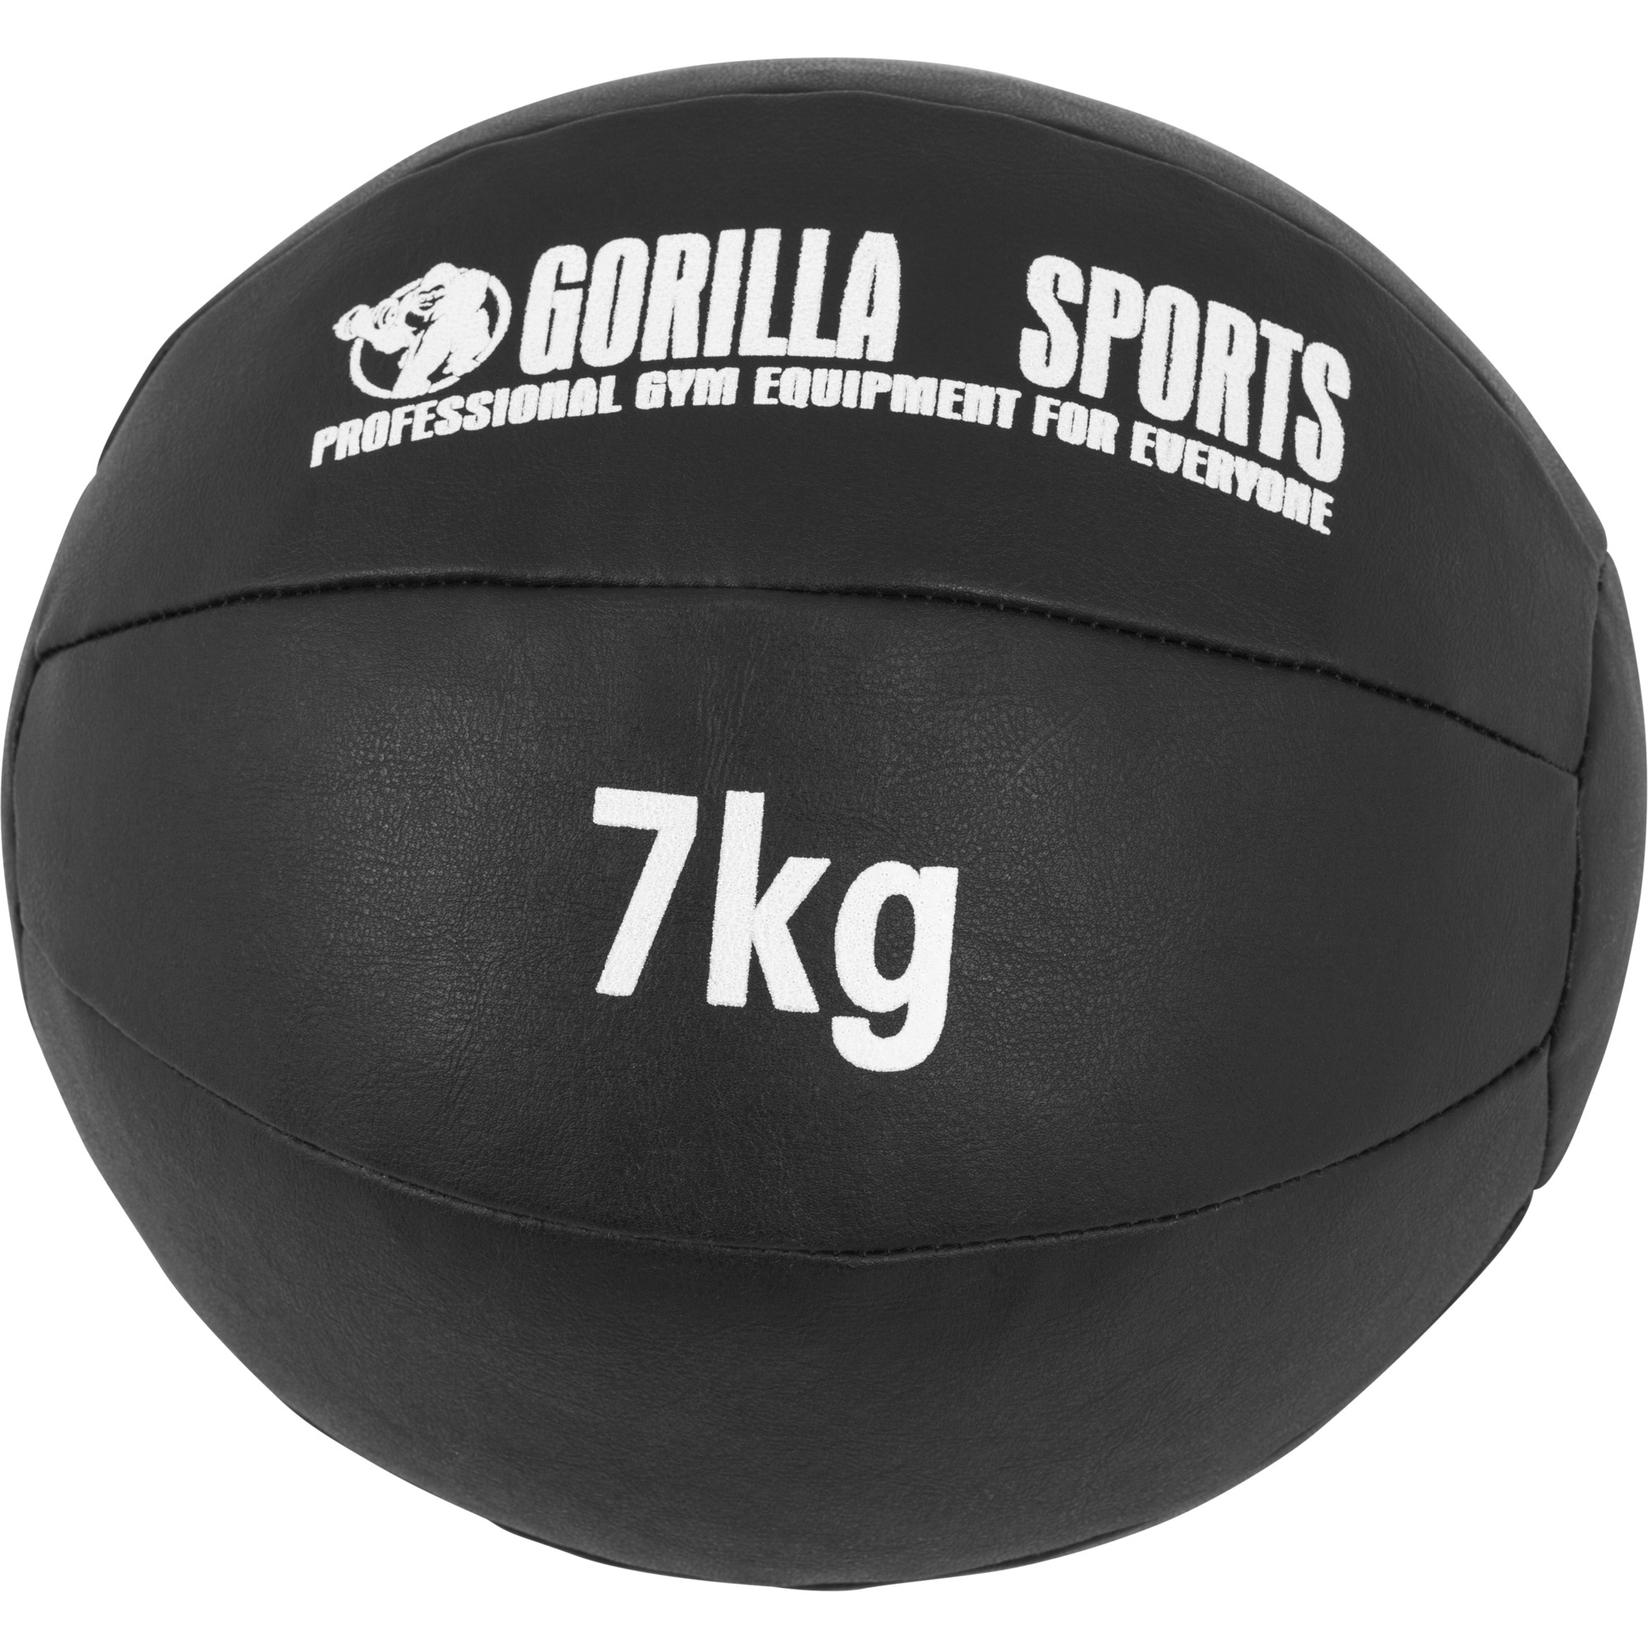 Selected image for GORILLA SPORTS Medicinska lopta 7 kg